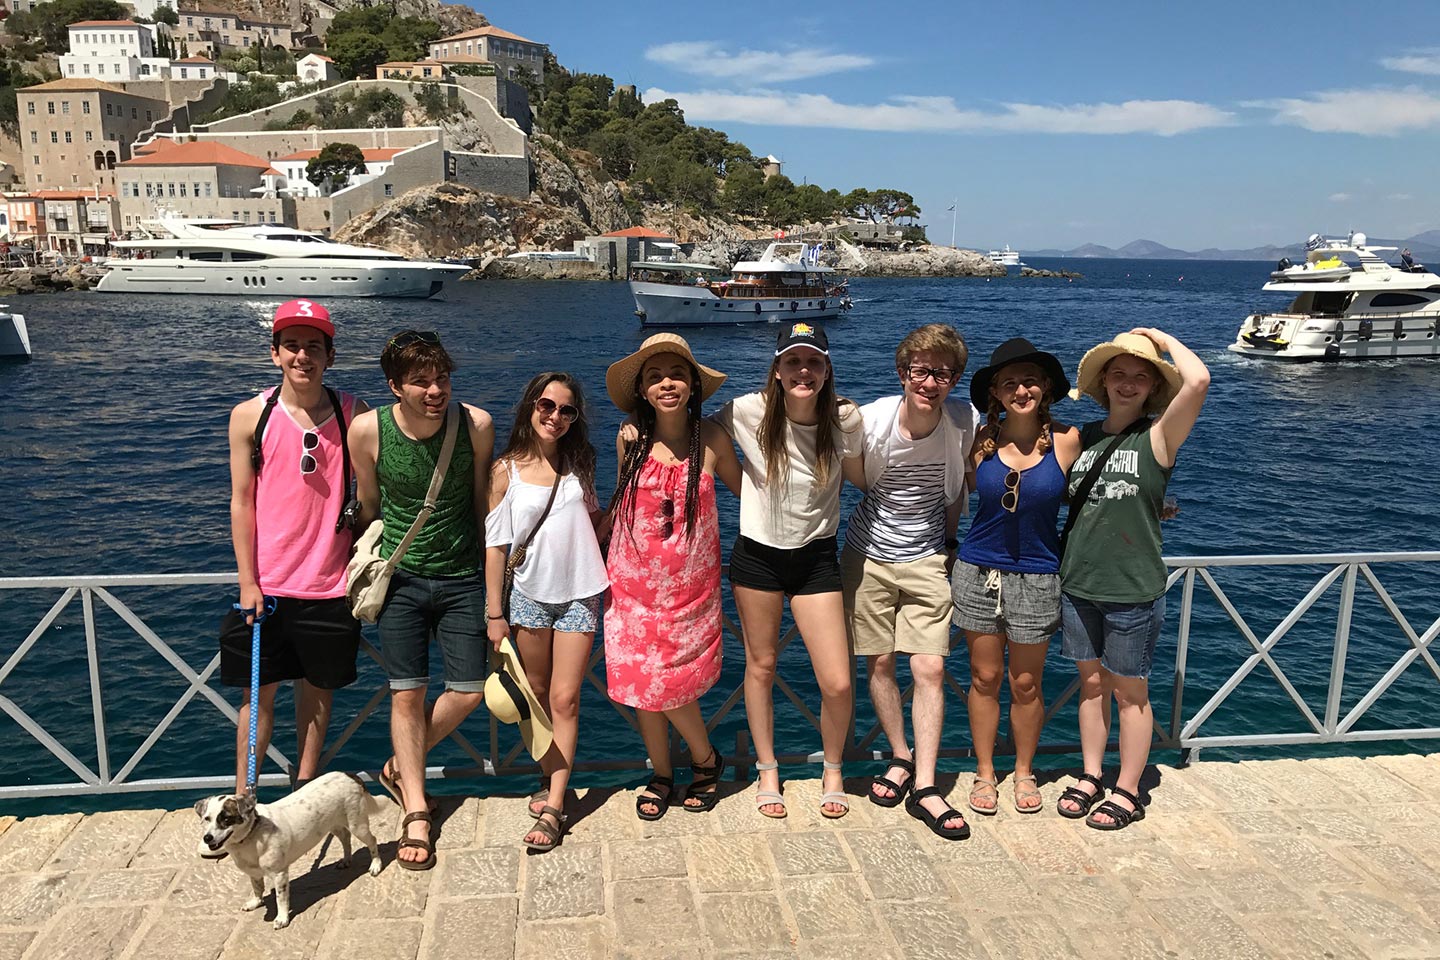 Students Mark Ujkstivani, Joel Hunter, Lily Talevski, Jordan Taylor, Natalie Manor, Noah Fillion, Alaina Whidby, Erin Wiley at Hydra port in Greece